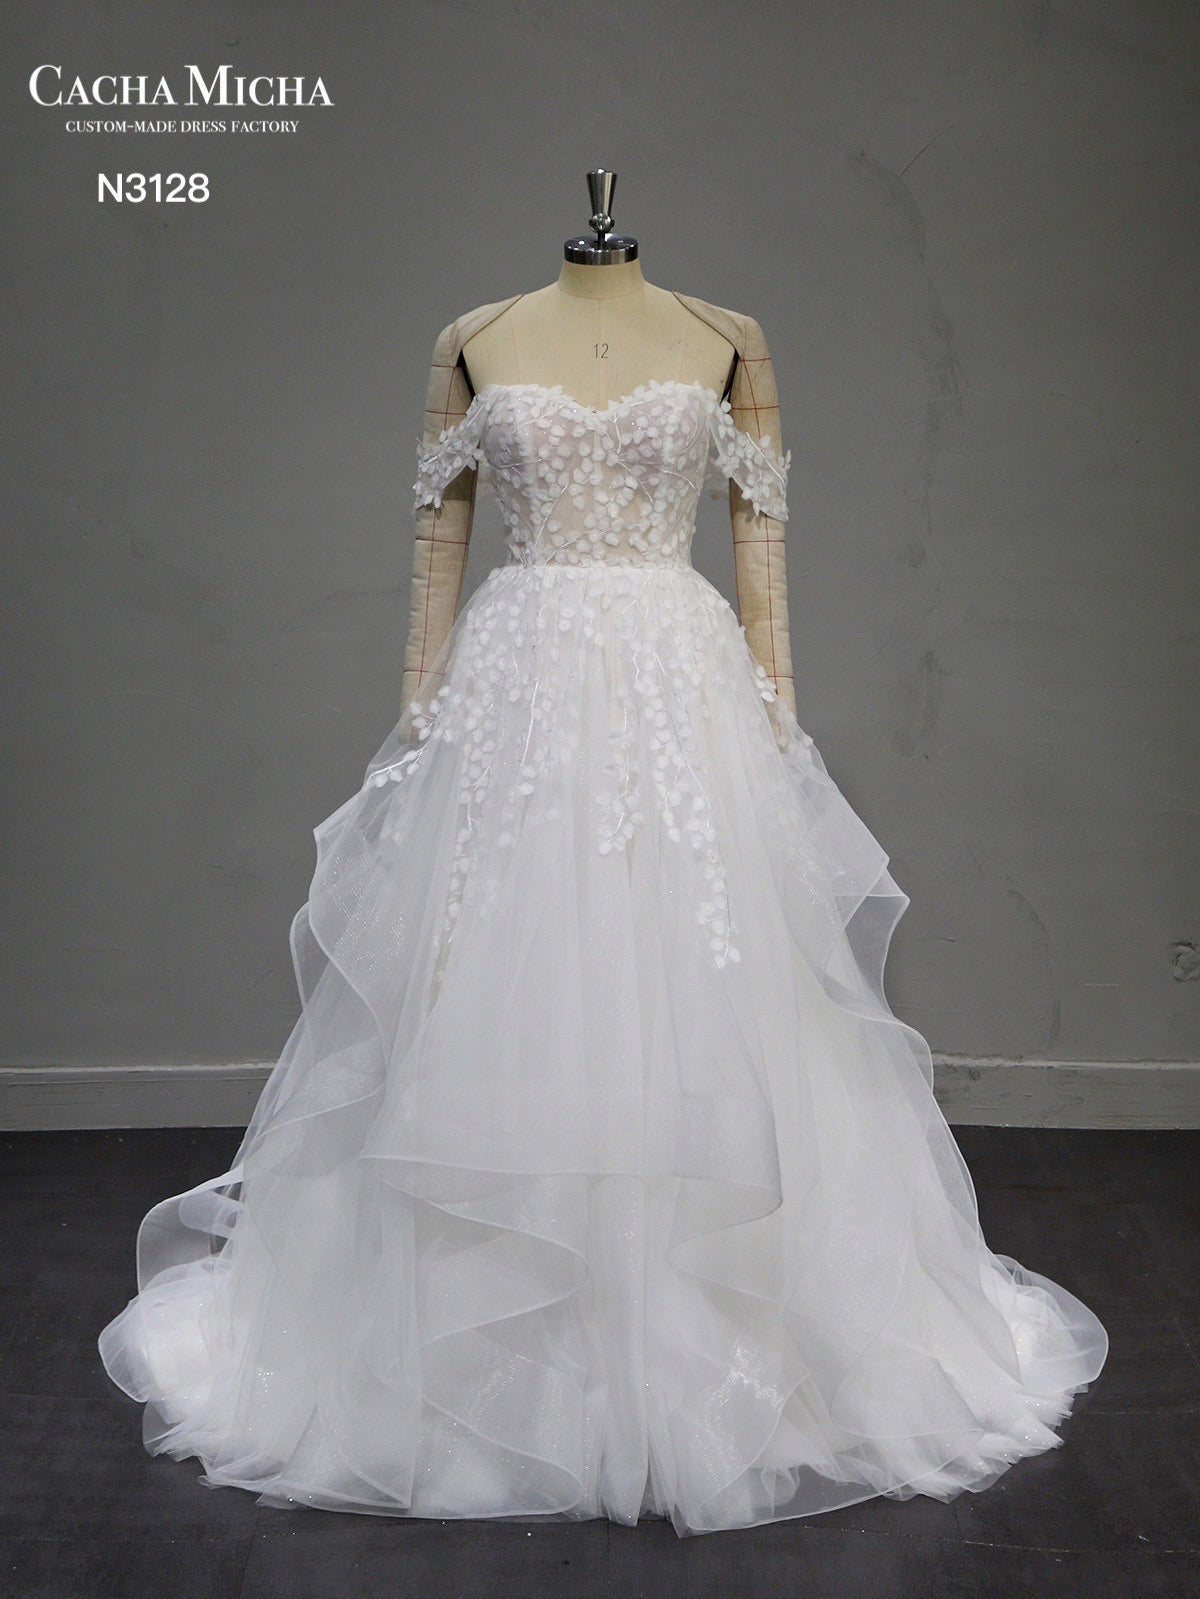 3D Petal Lace Charming Wedding Dress With Ruffle Skirt N3128